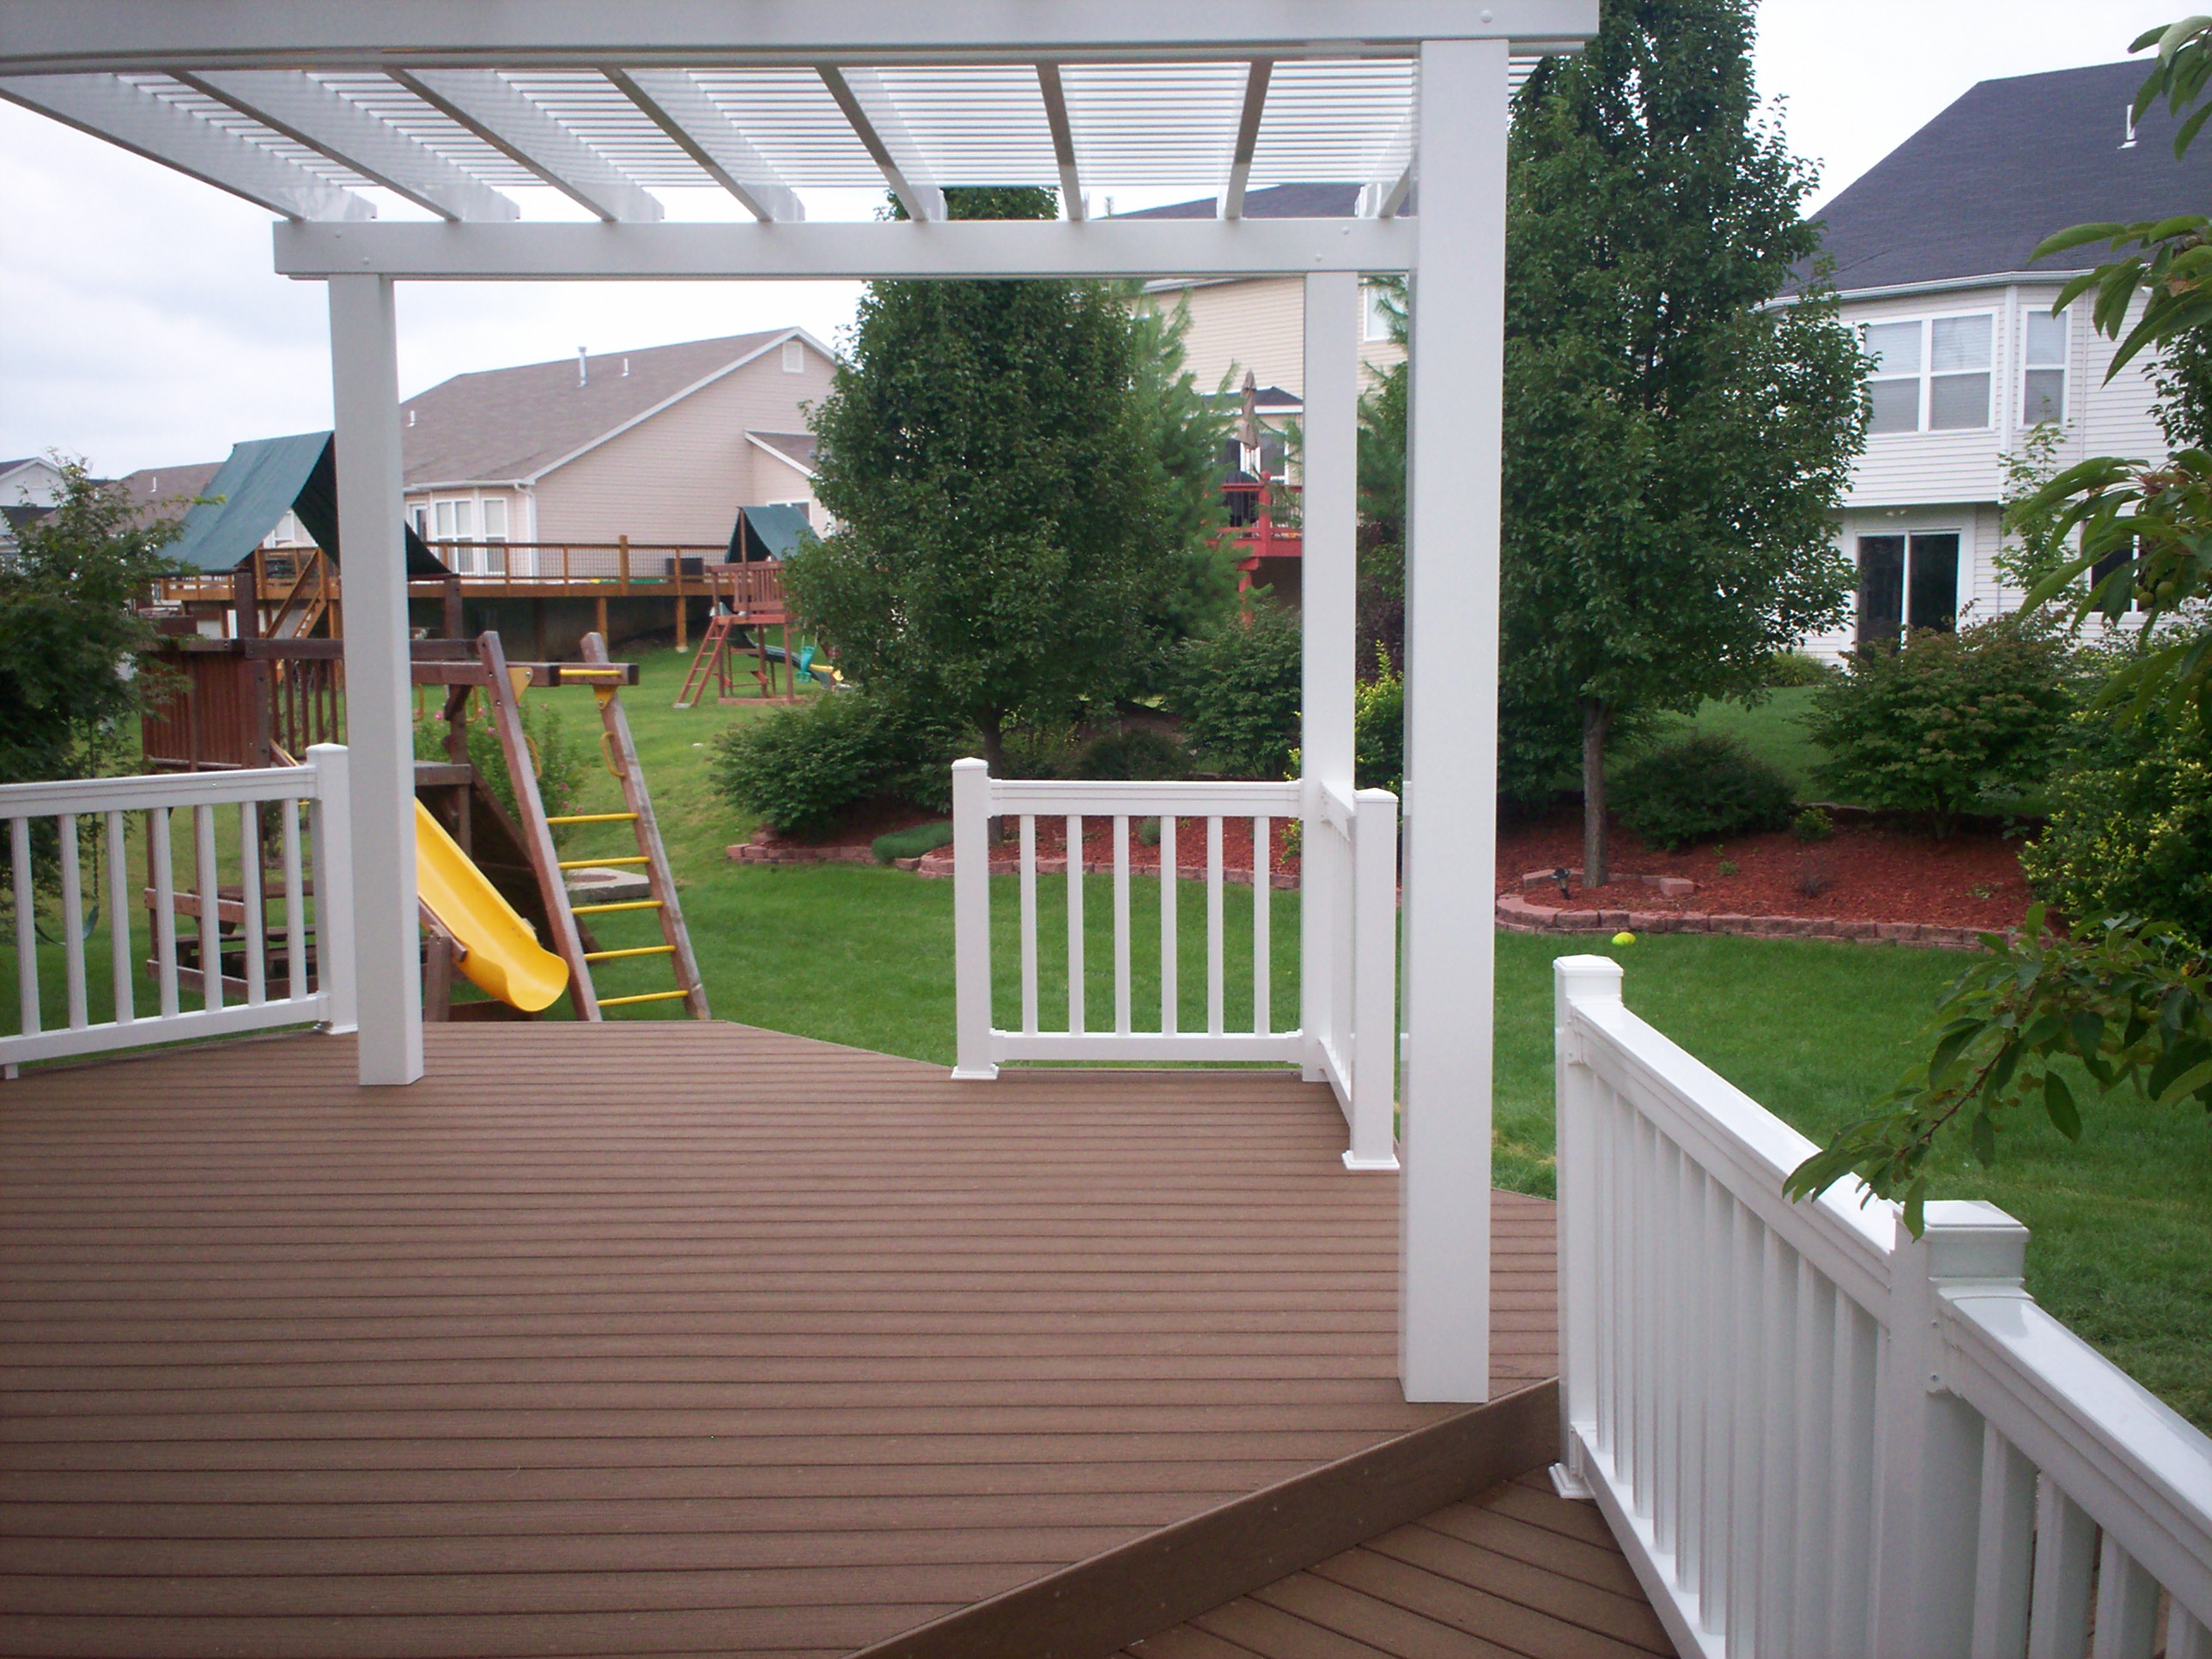 St. Louis Deck Builders: Deck Railing Ideas by Archadeck | St. Louis decks, screened porches ...